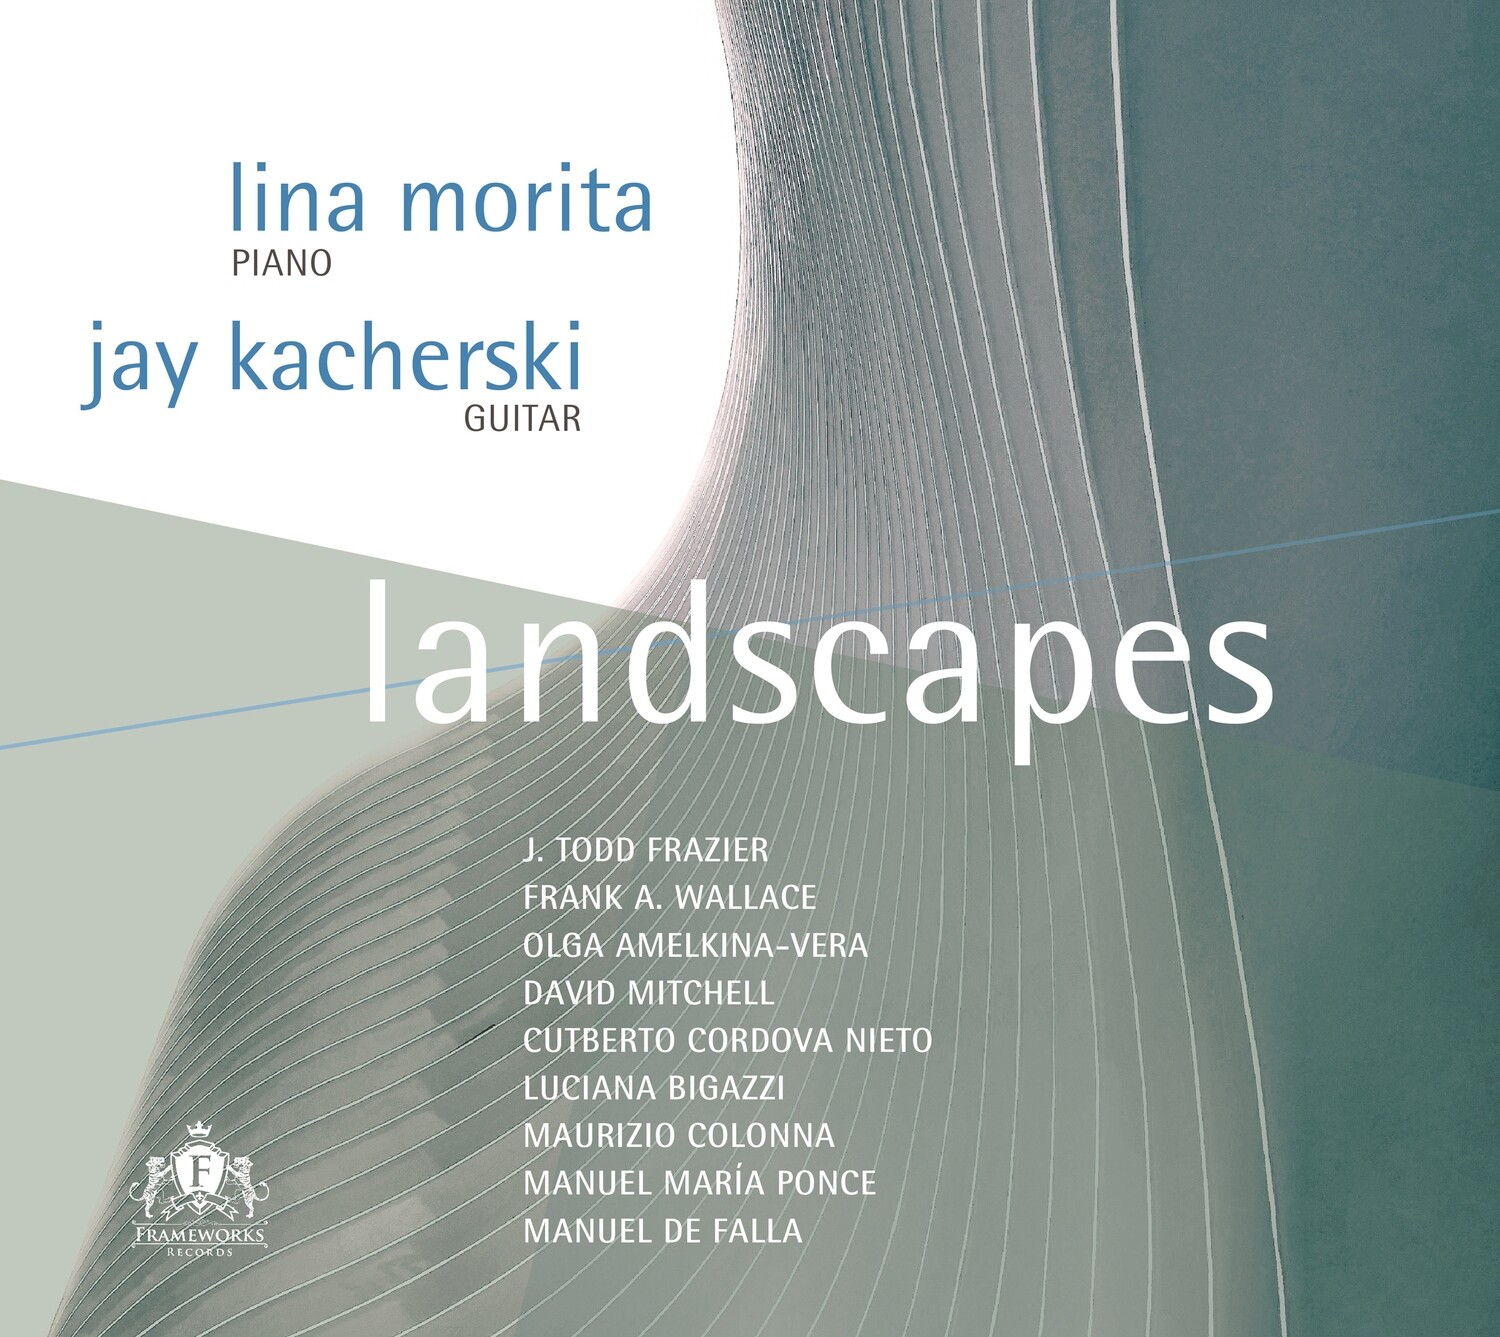 Jay Kacherski and Lina Morita - Landscapes - PHYSICAL - INTERNATIONAL ORDER - (Personalized - Signed)